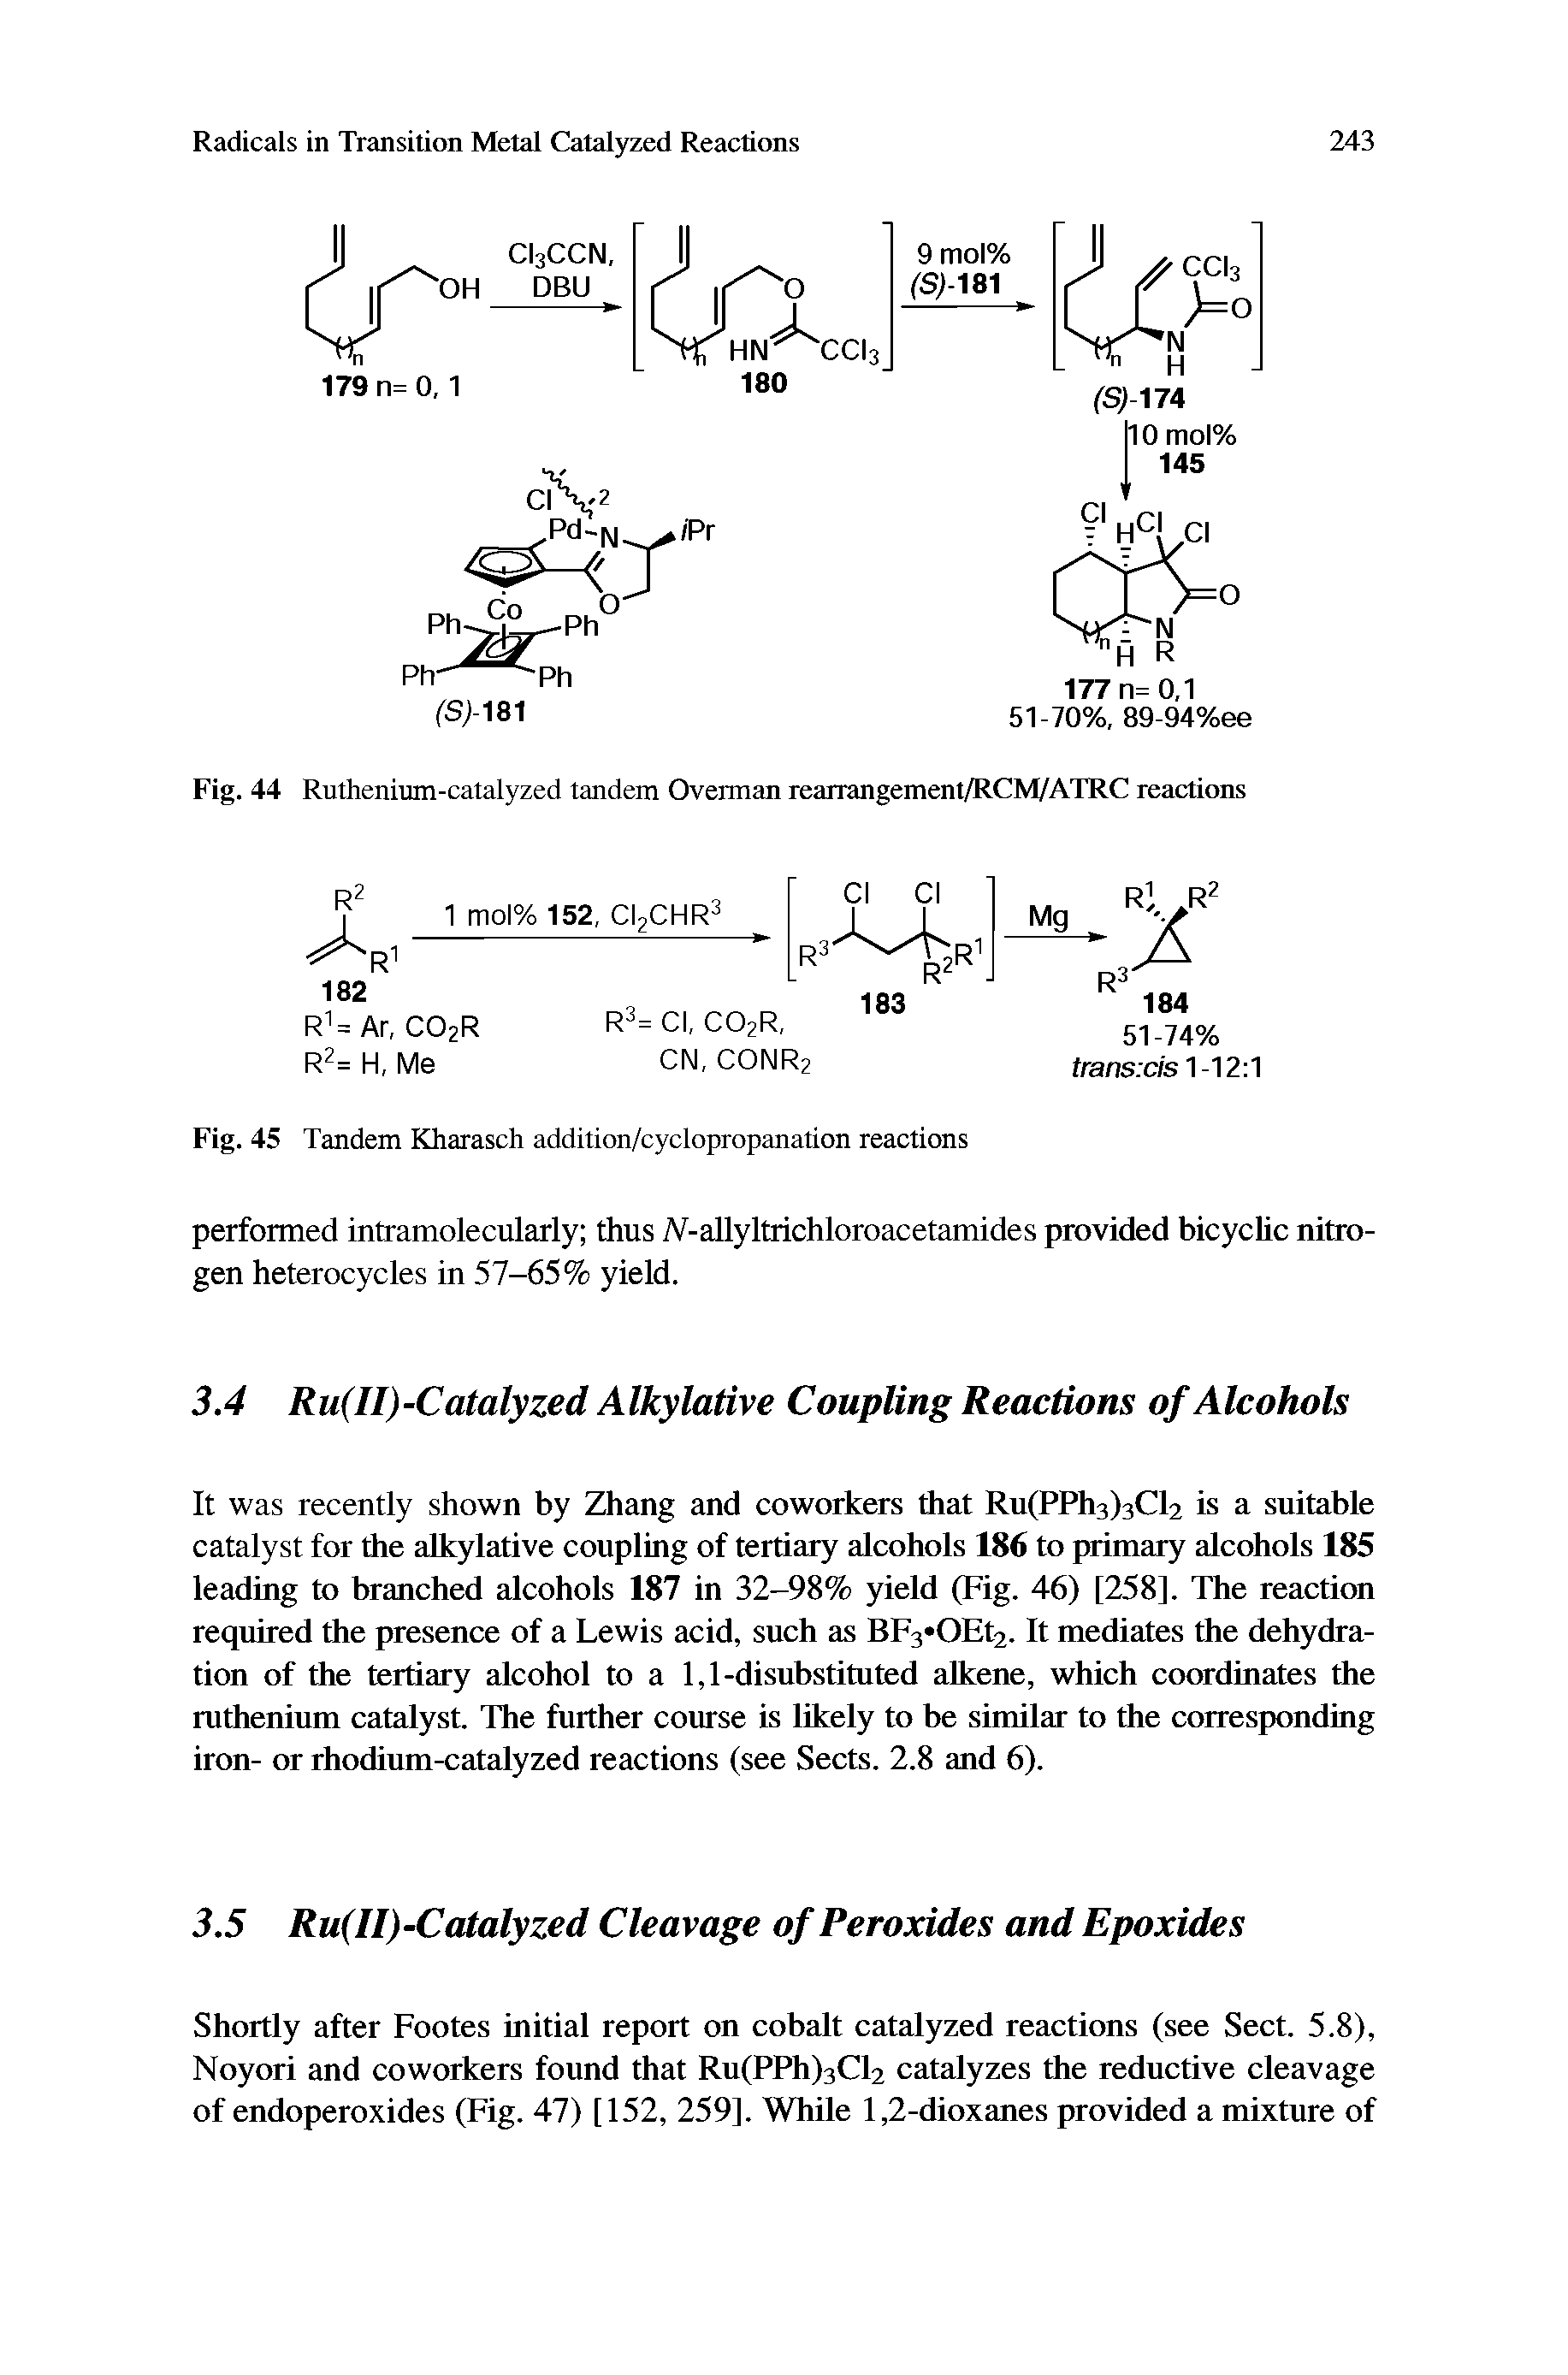 Fig. 44 Ruthenium-catalyzed tandem Overman rearrangement/RCM/ATRC reactions...